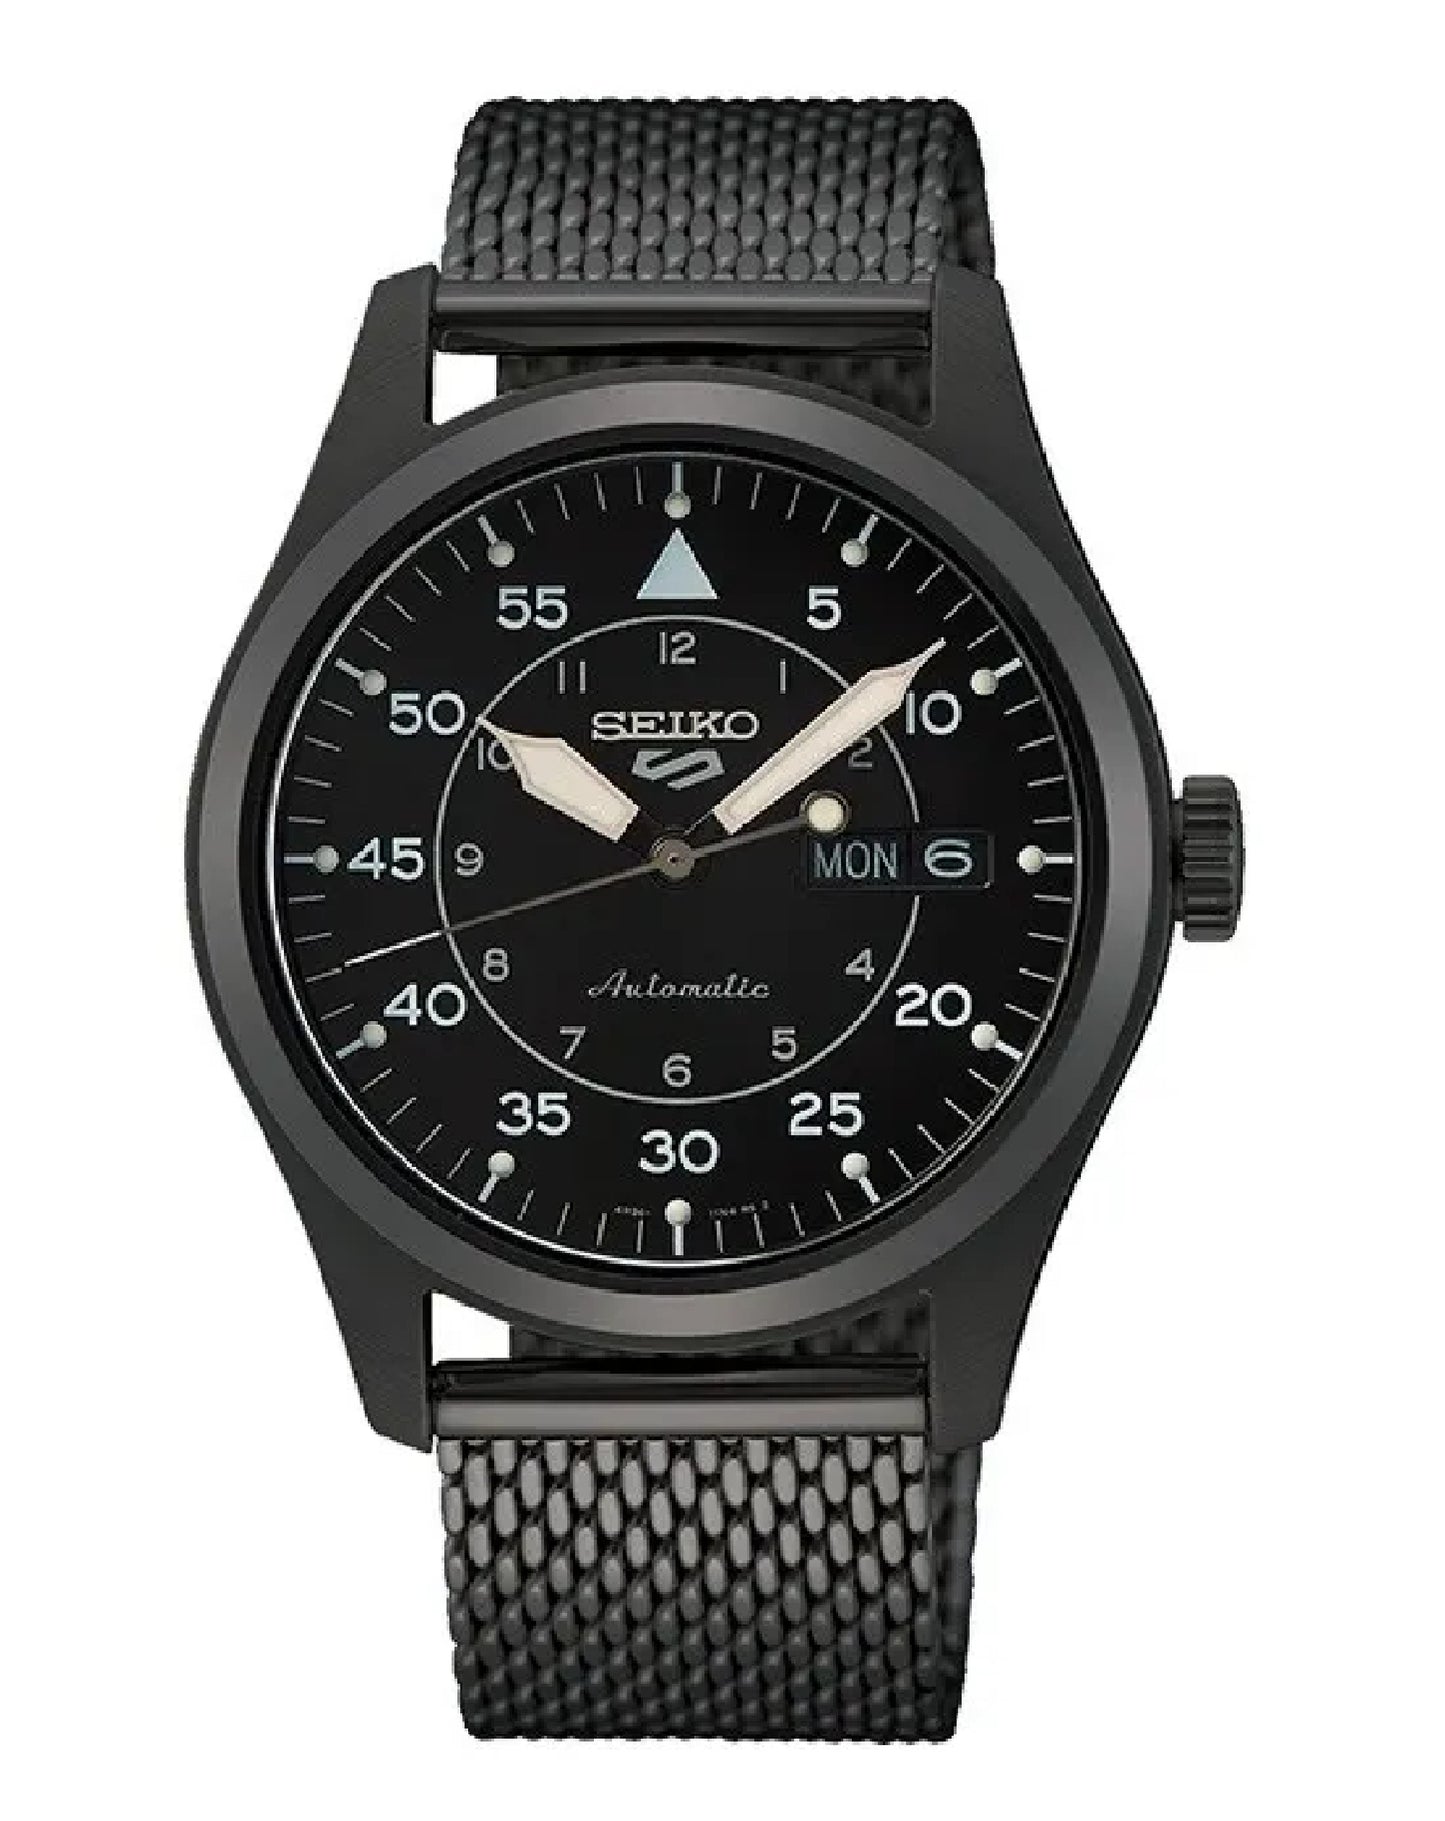 Seiko SRPH25K1 Seiko 5 SPORT Automatic Black Dial Watch